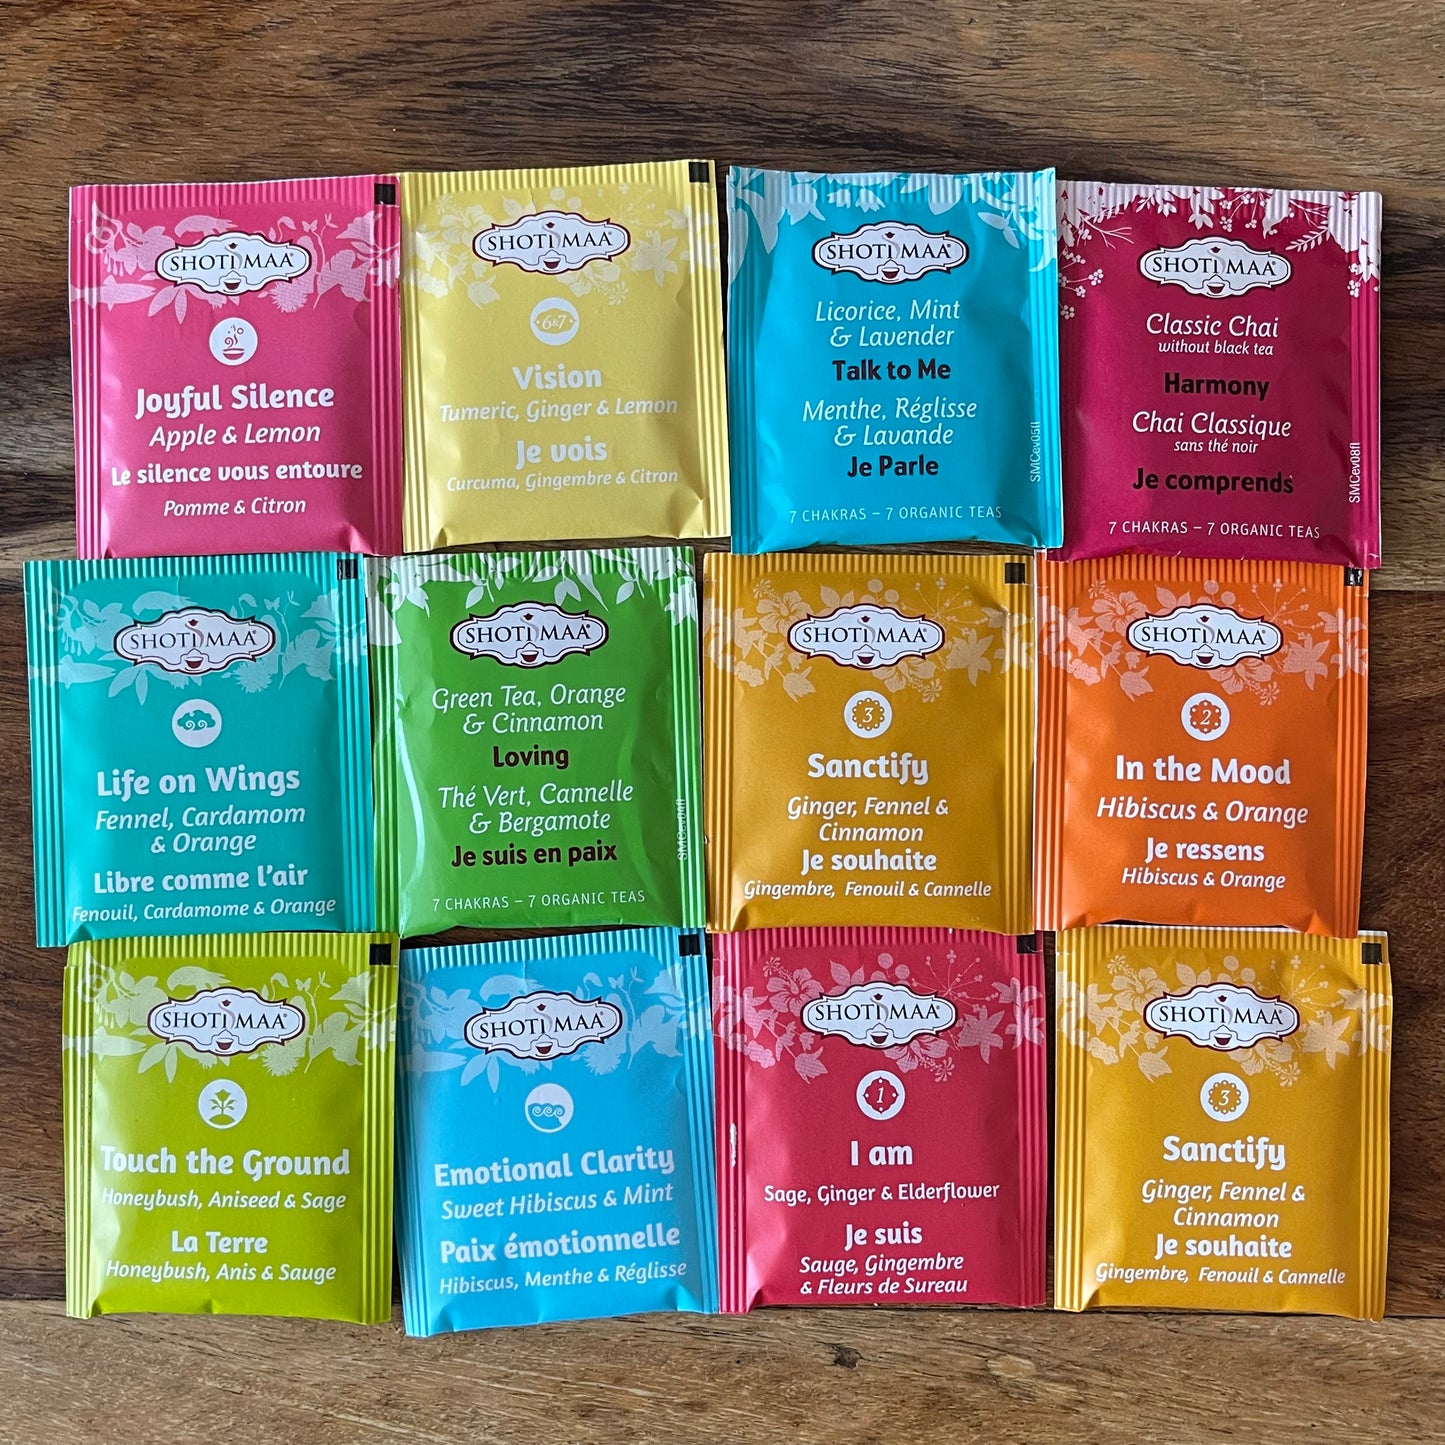 Shoti Maa Magic Box all 12 organic tea flavours